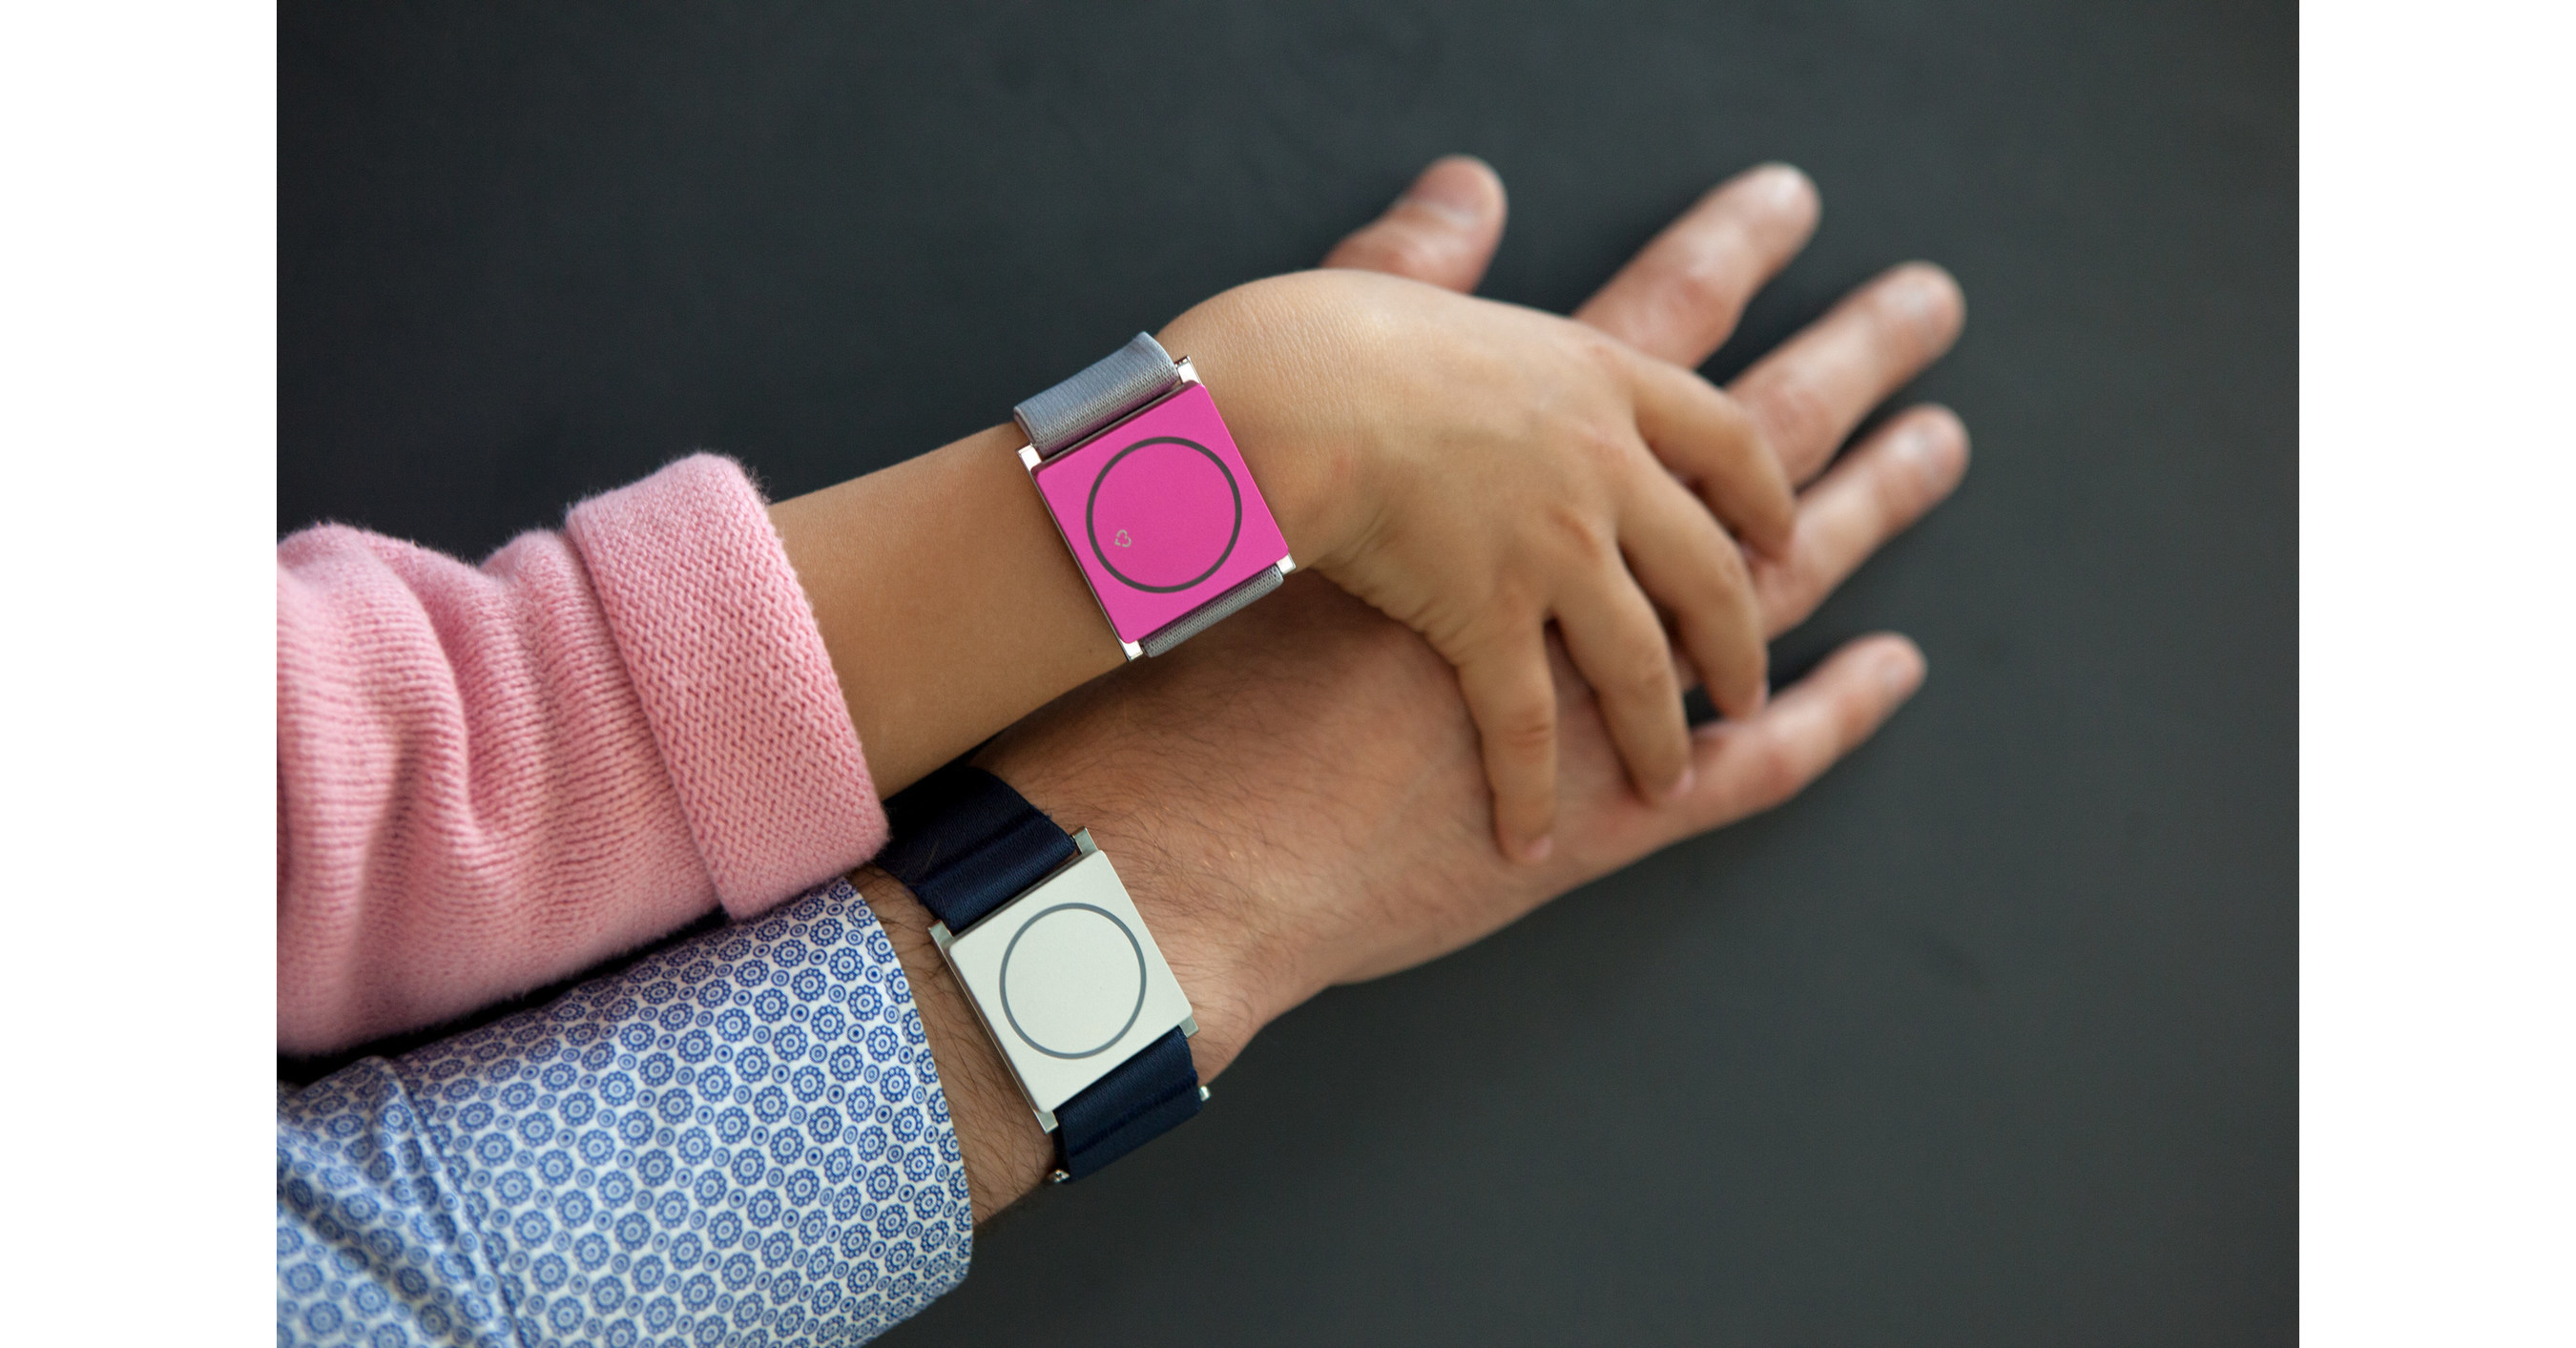 The Epilepsy & Seizure Alert App on your Smartwatch - My Medic Watch